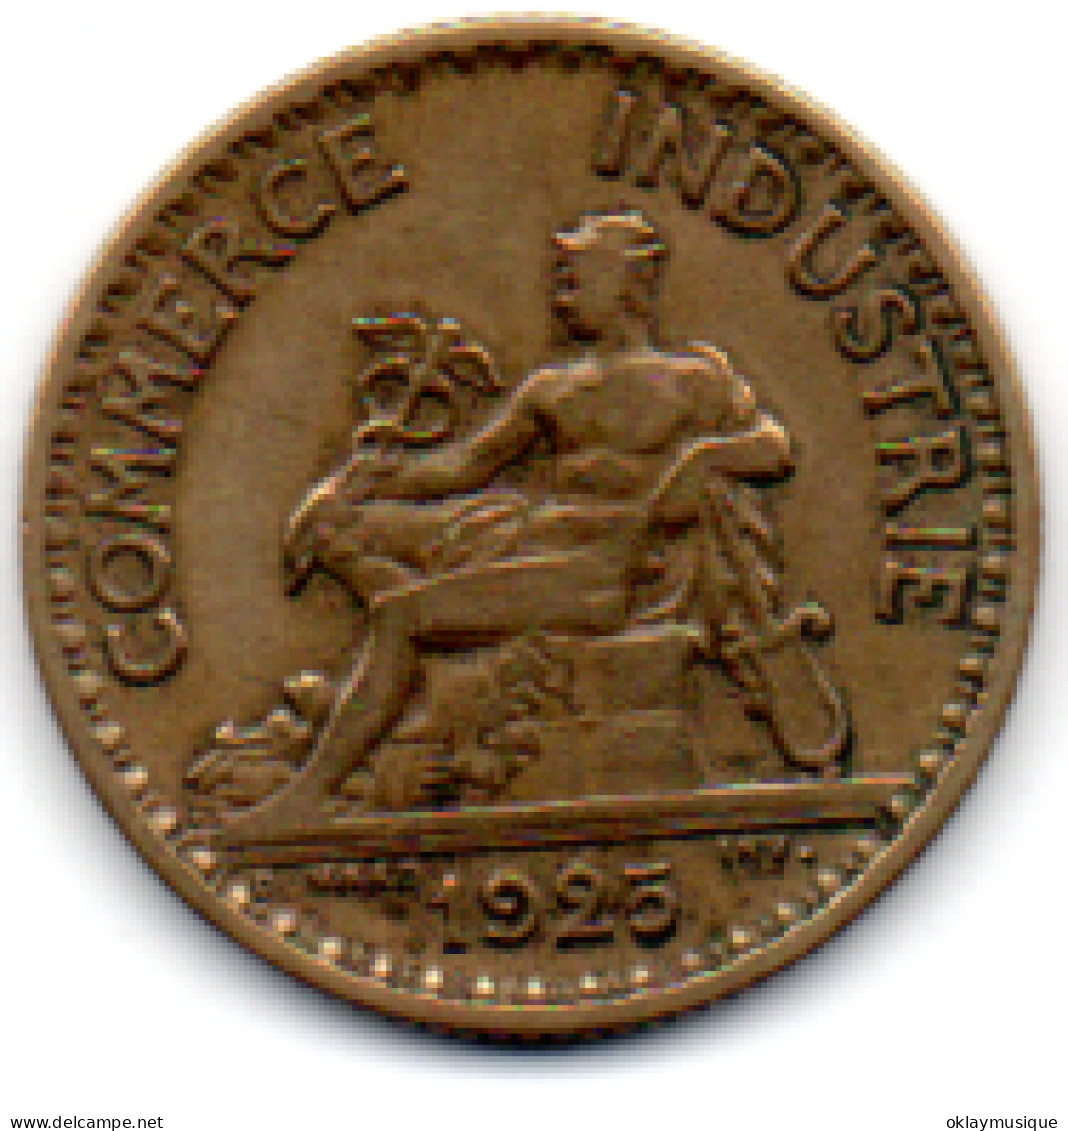 1 Franc 1925 - 1 Franc